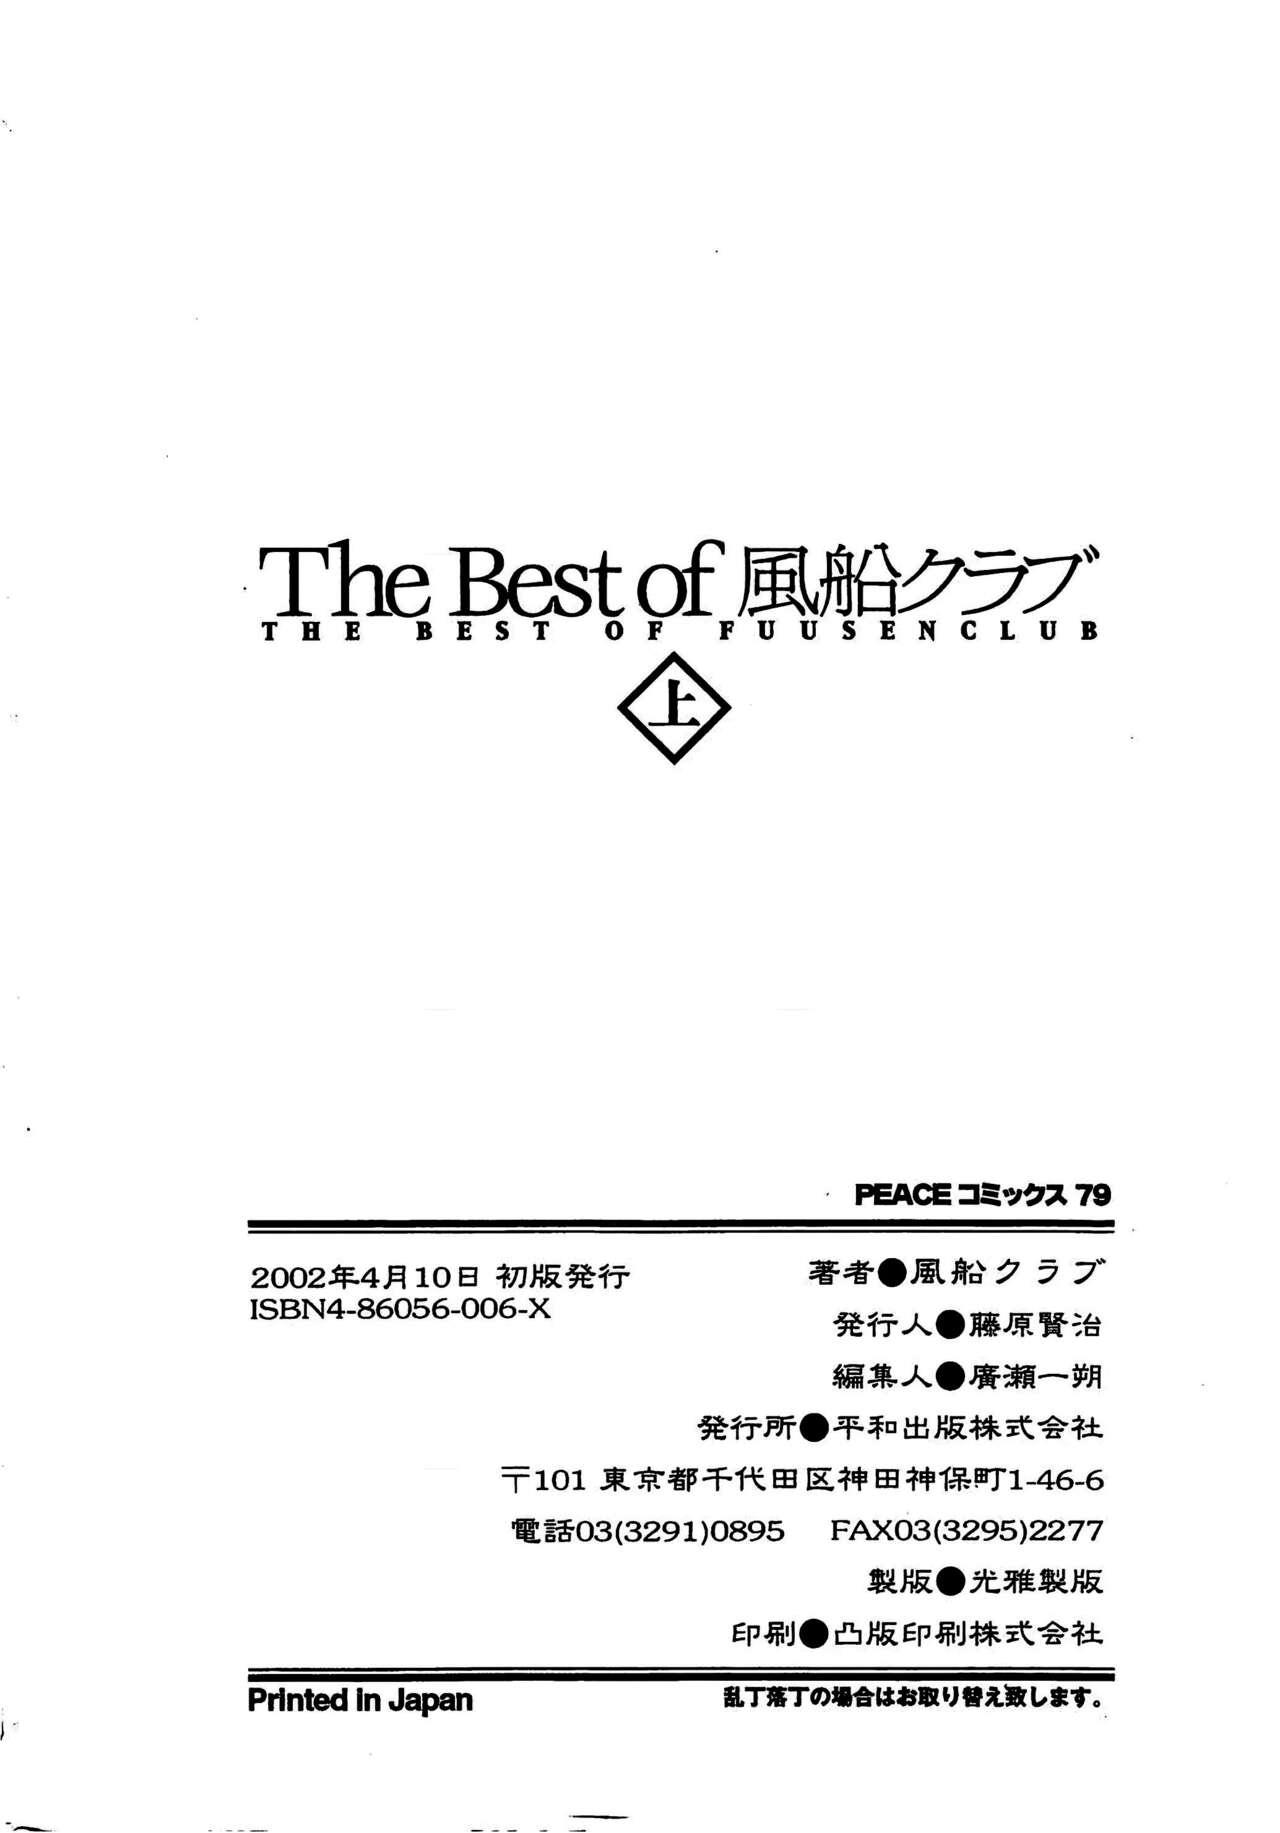 The Best of Fuusen Club Vol.1 196